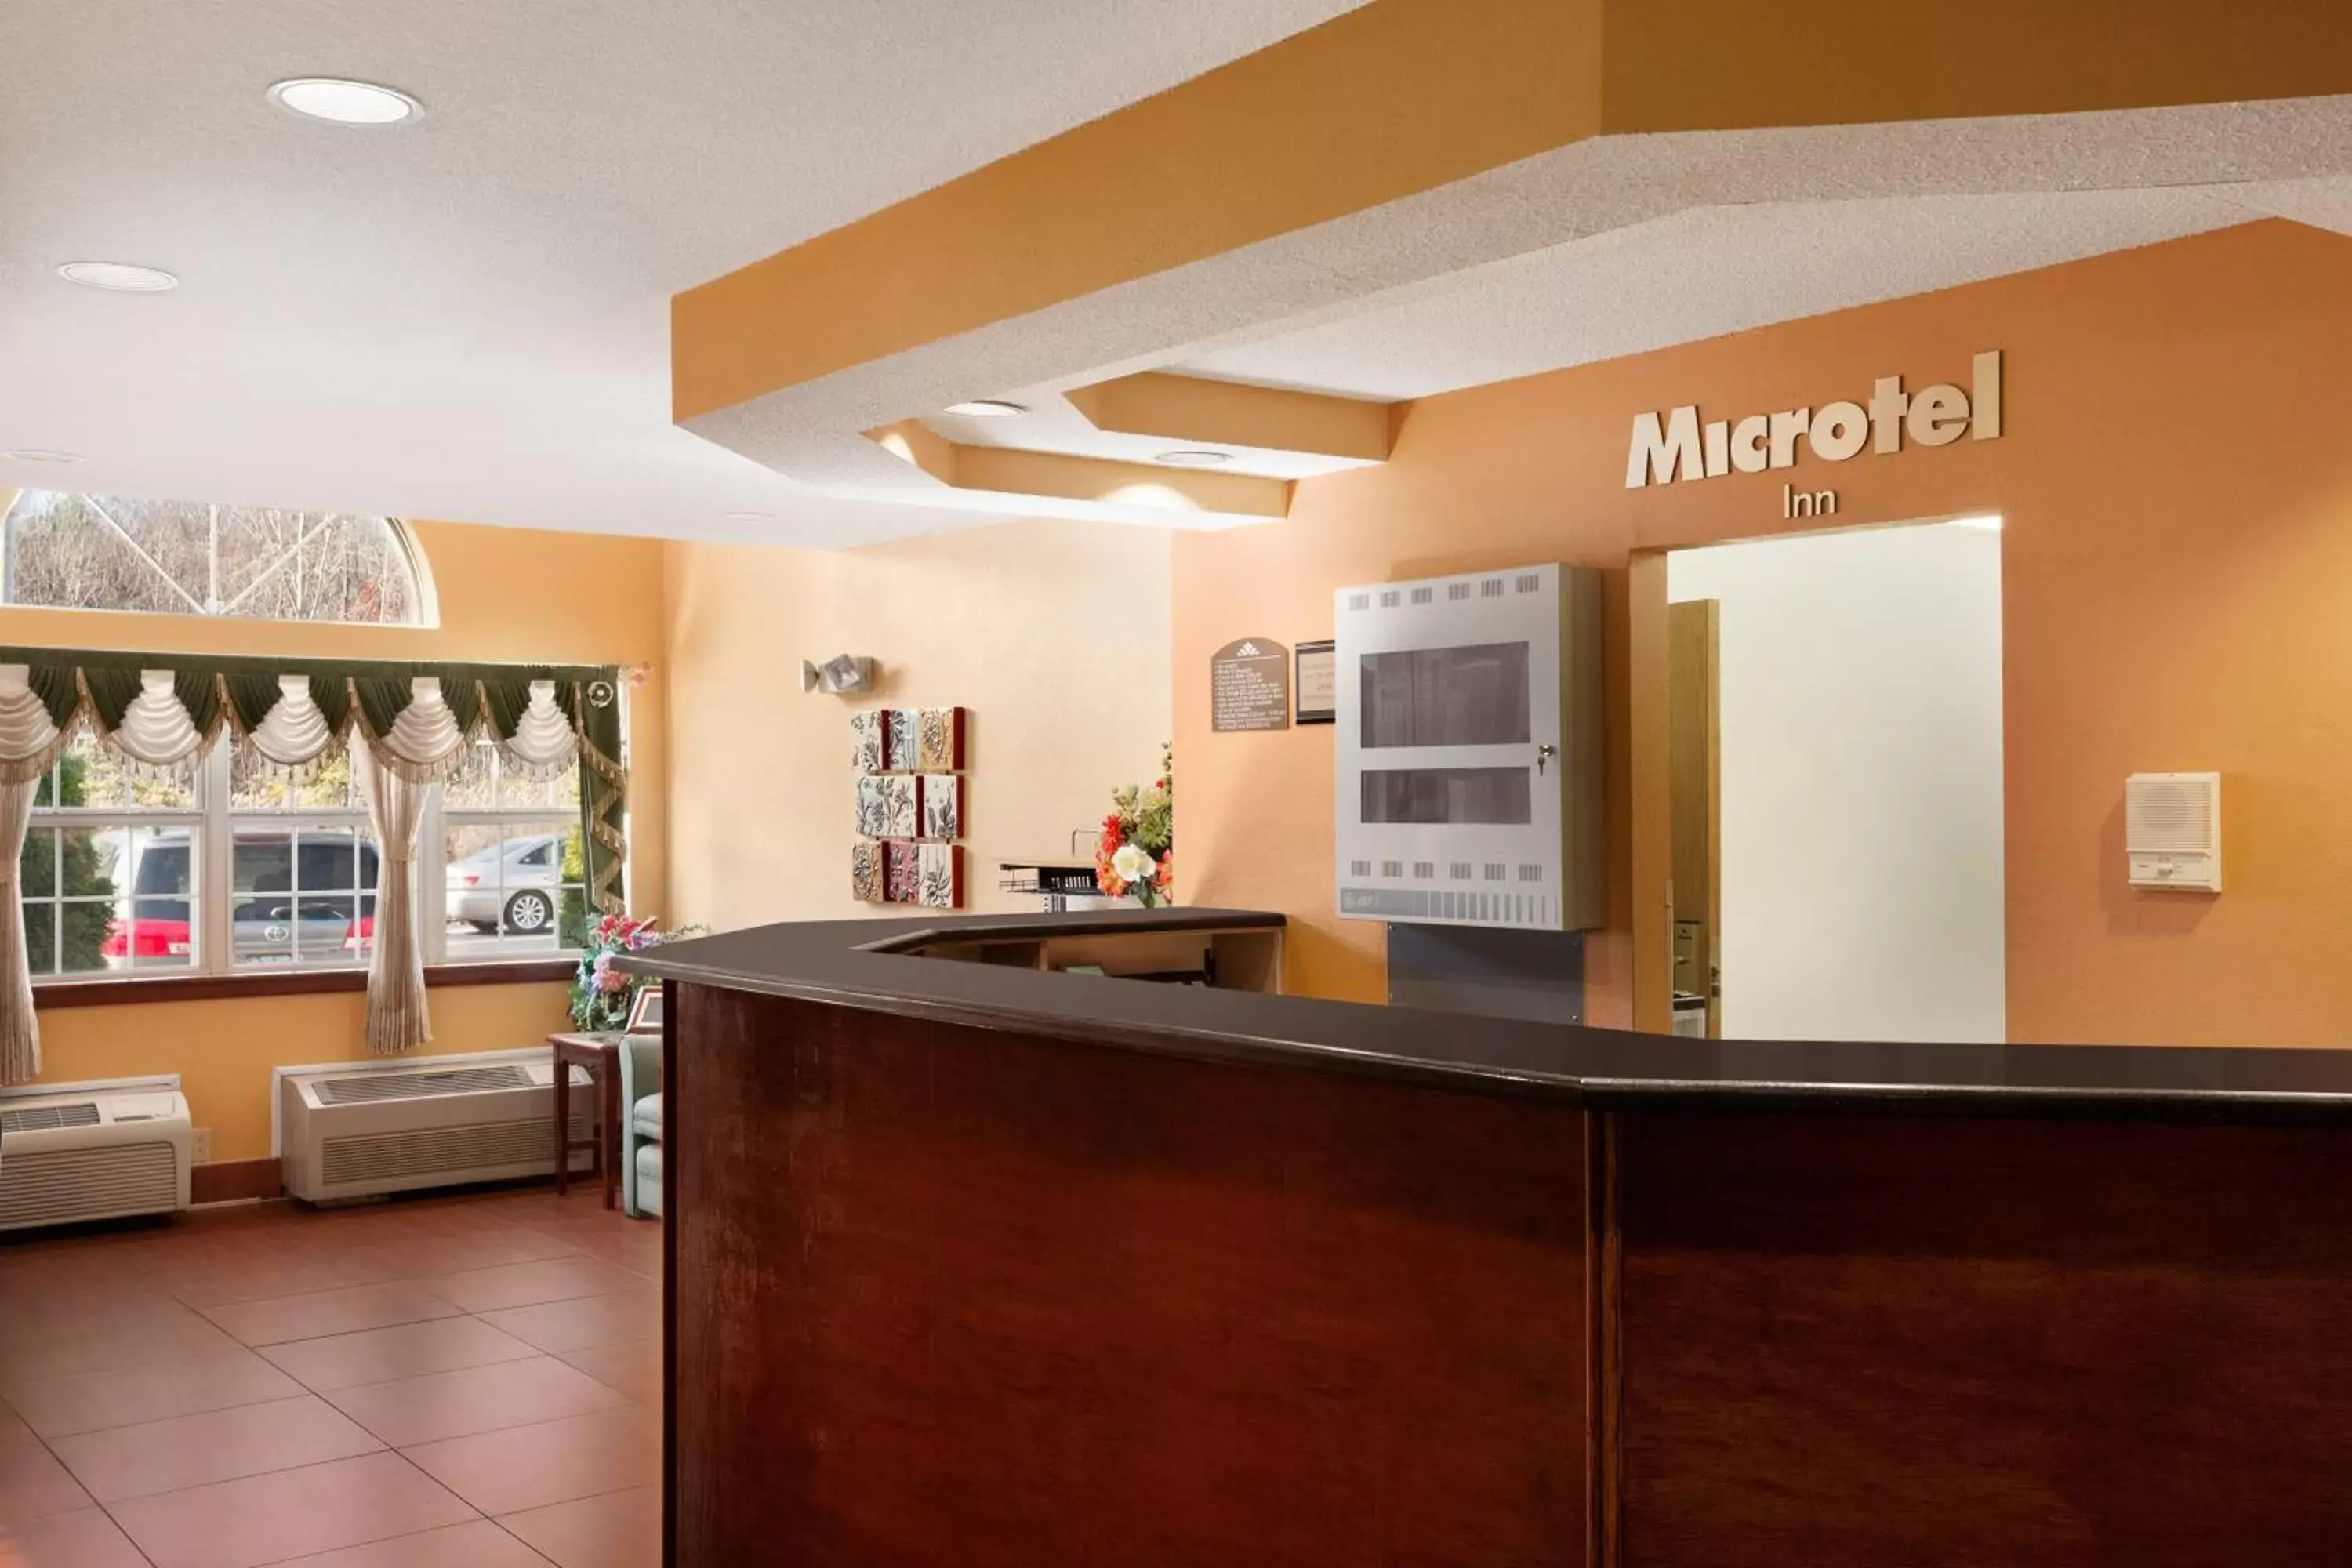 Lobby or reception, Lobby/Reception in Microtel Inn by Wyndham - Albany Airport